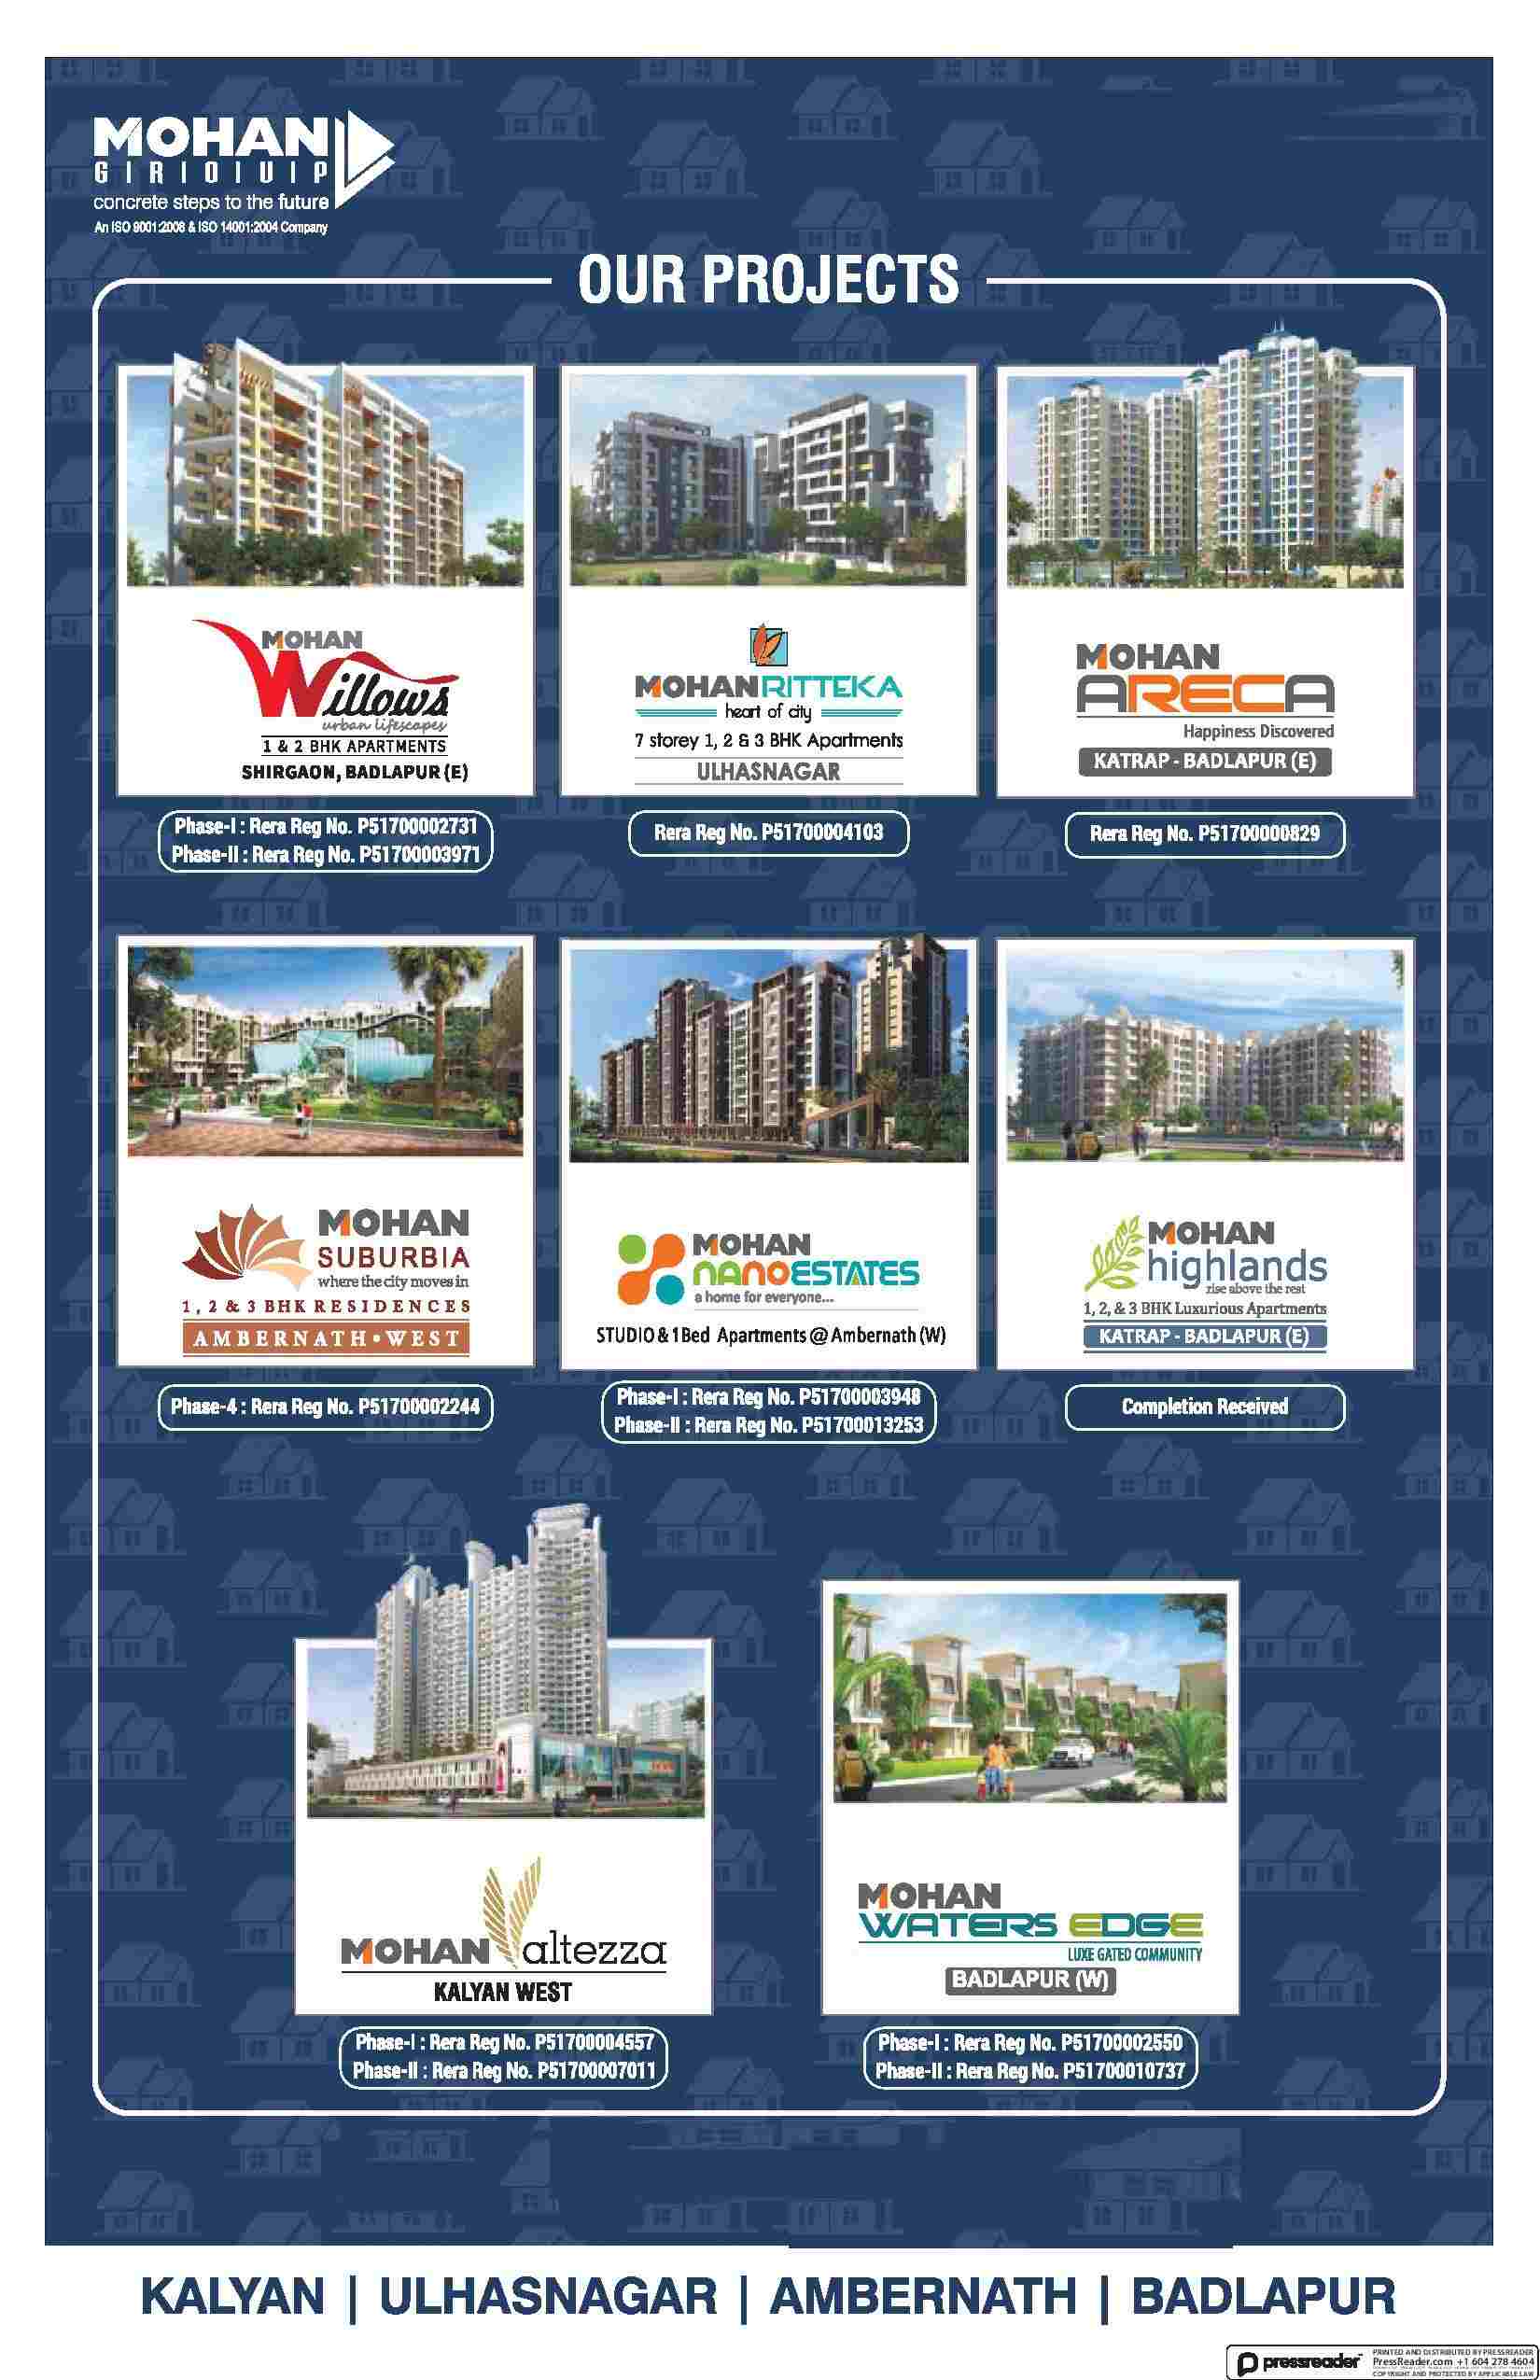 Invest in Mohan properties in Mumbai Update